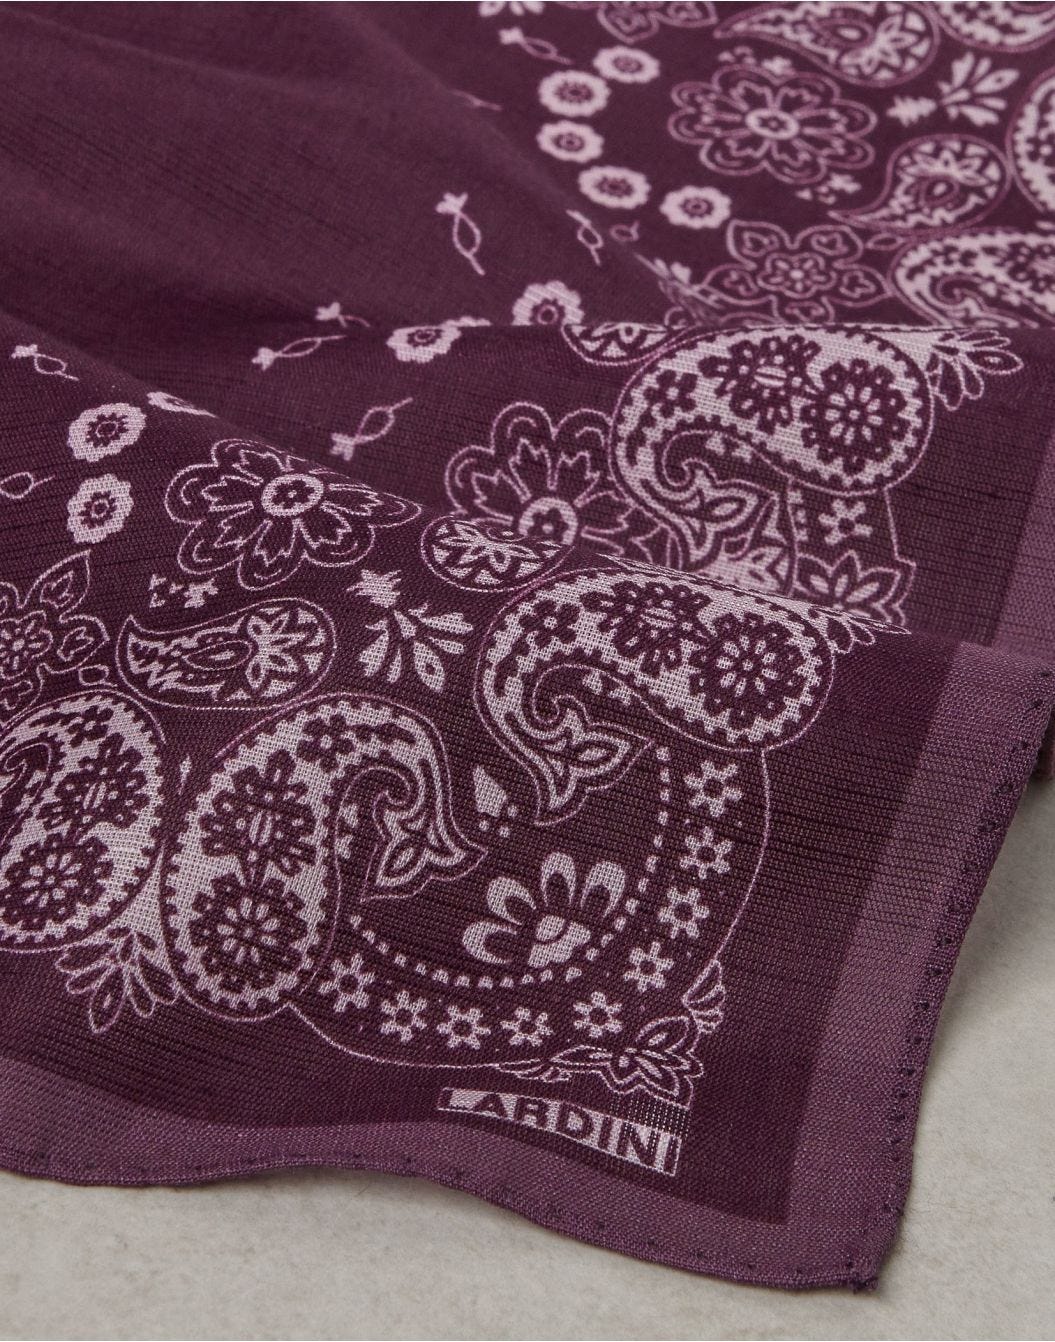 Purple pocket square with contrasting bandana print